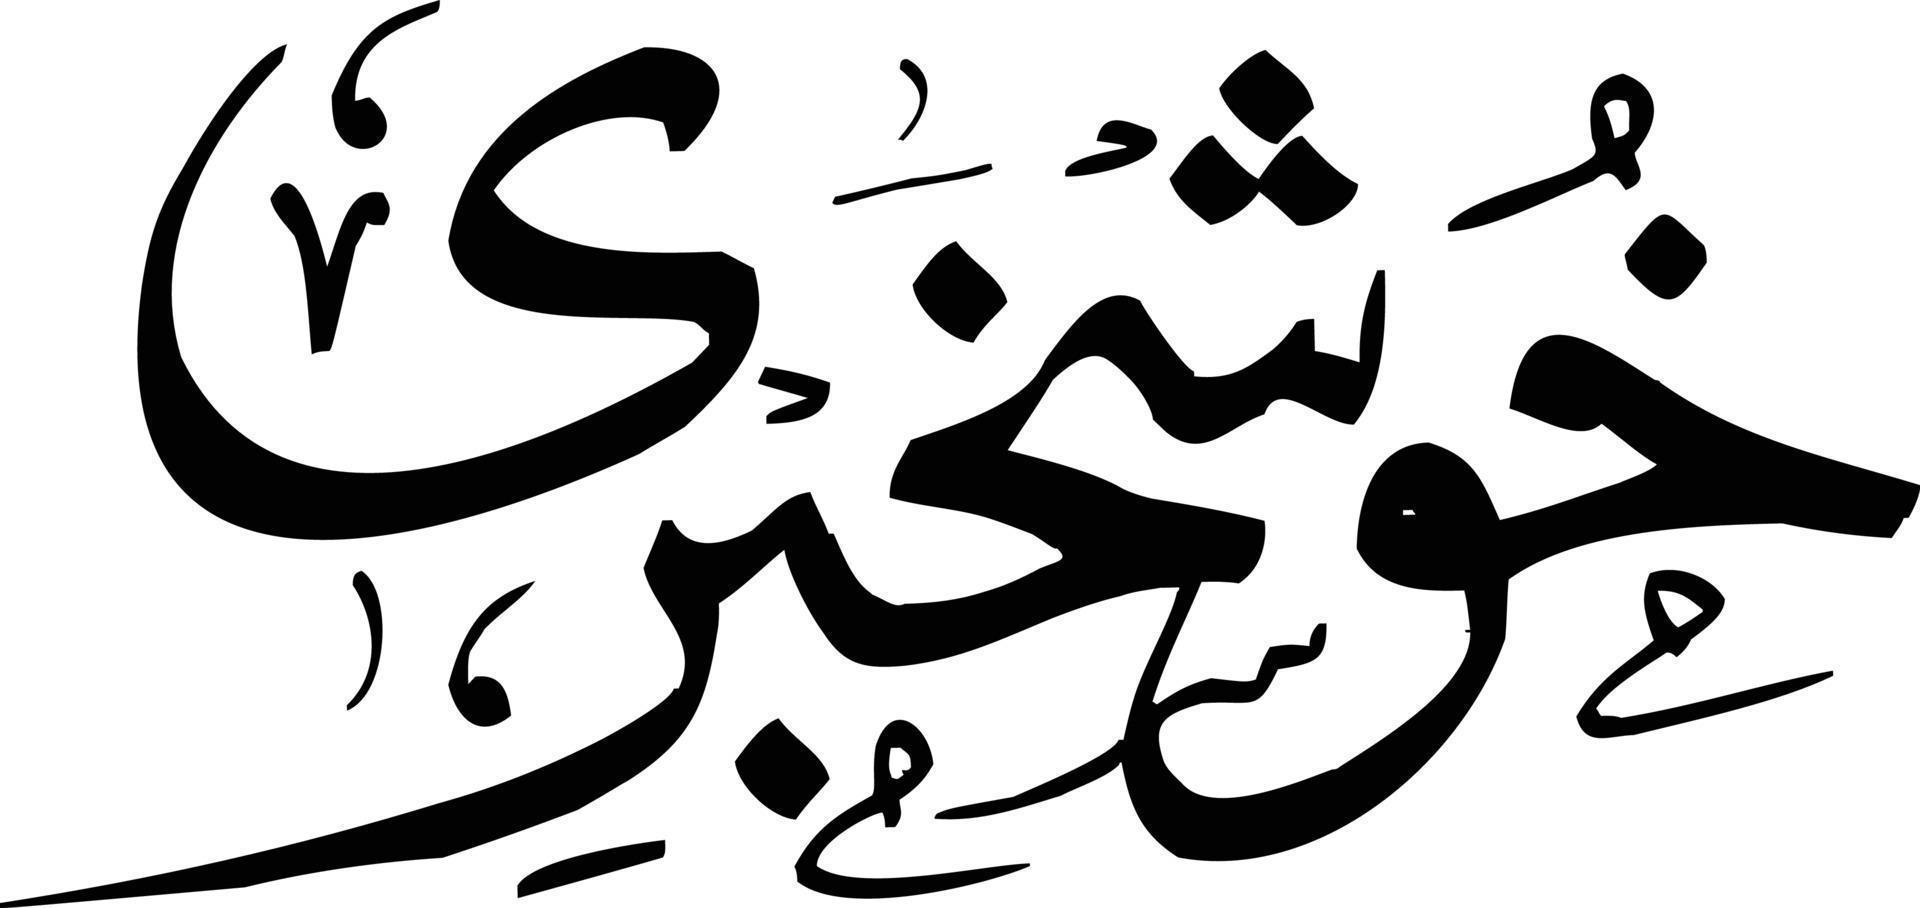 vector libre de caligrafía islámica kshosh kabrey